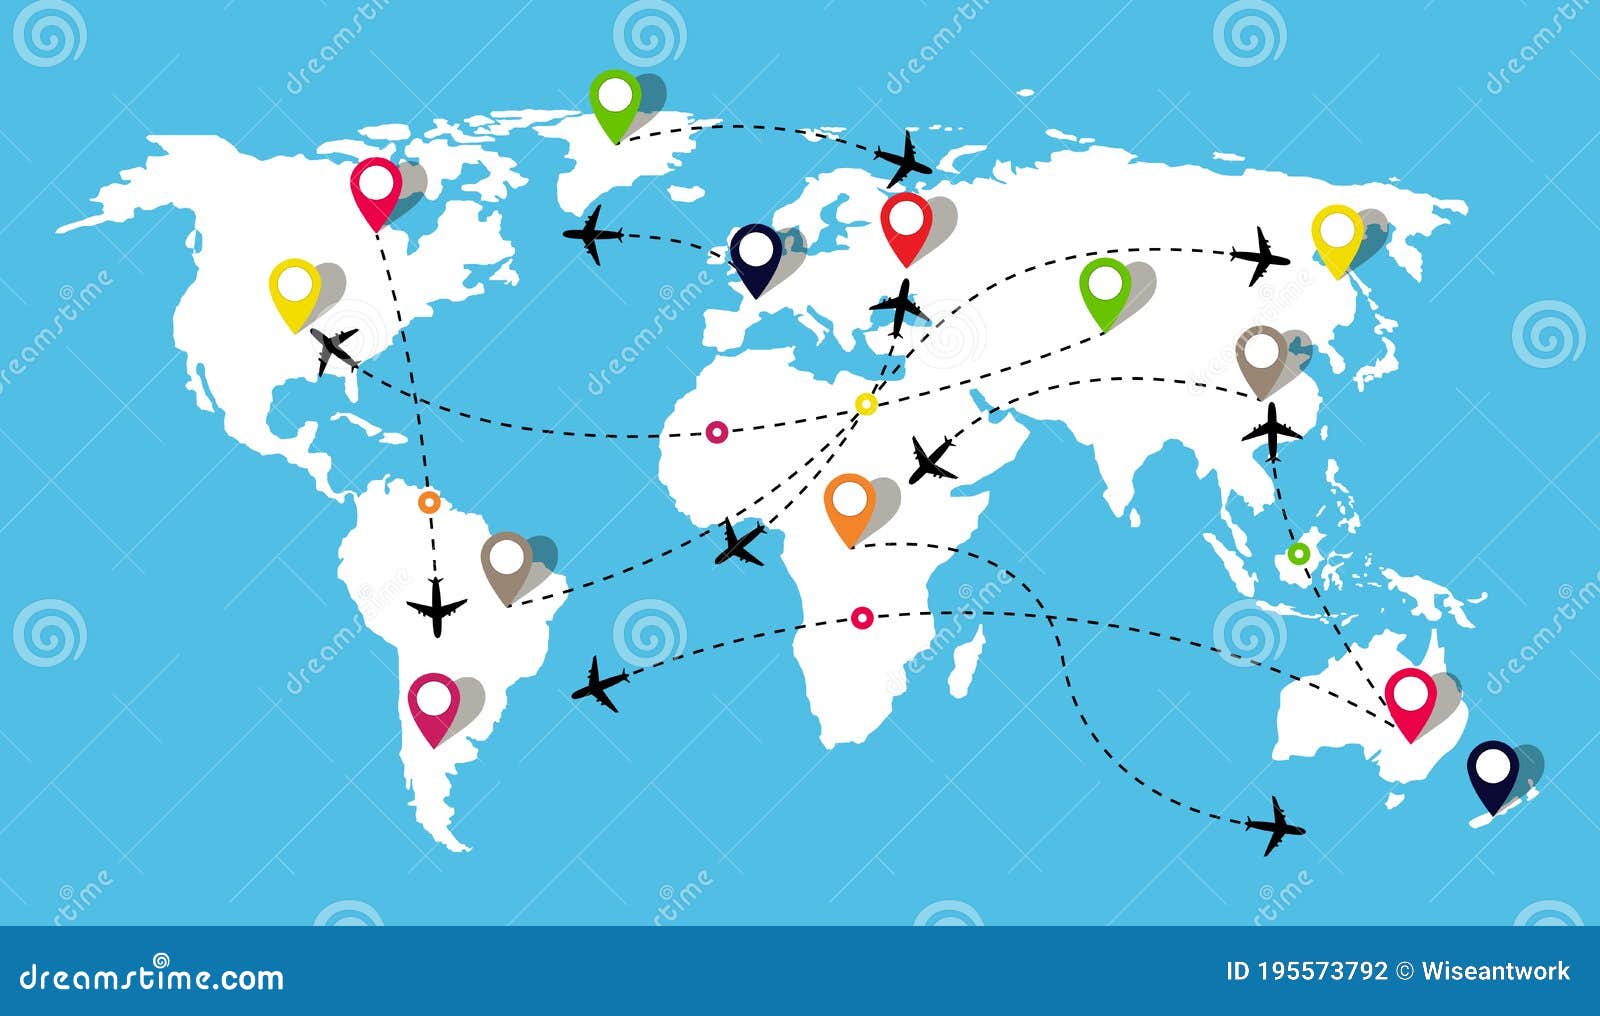 journey around the world airlite travel